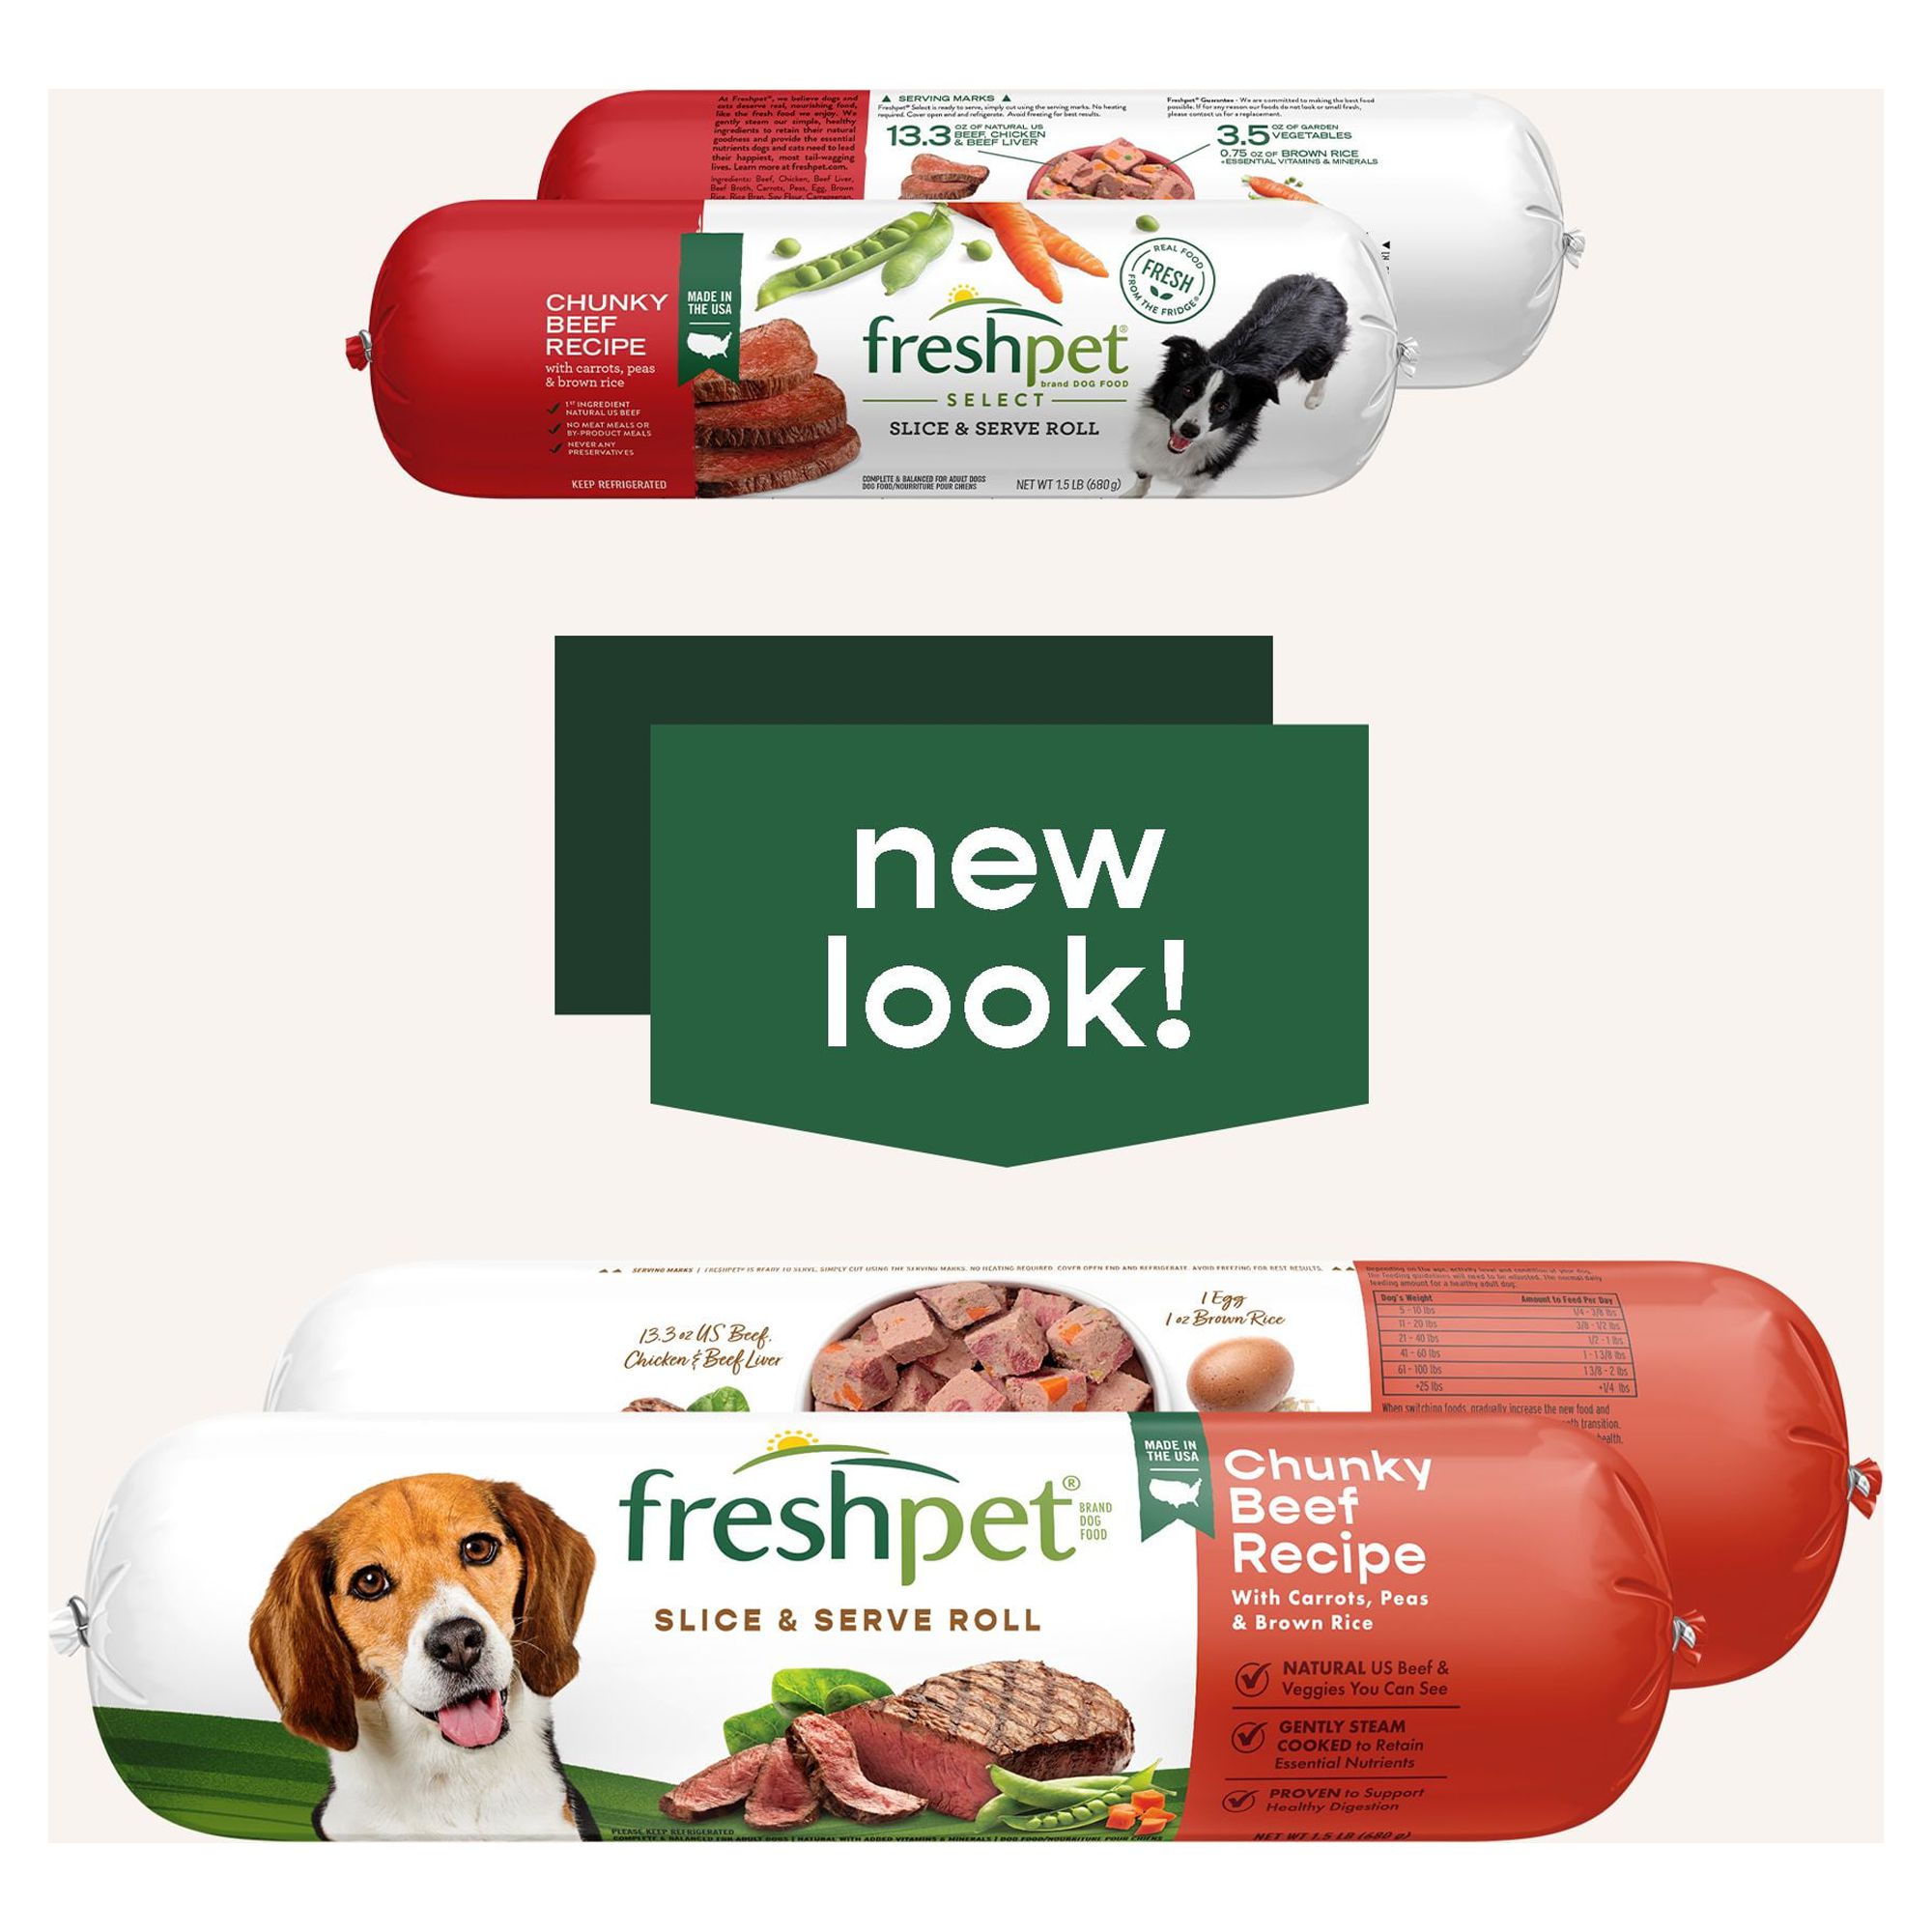 Freshpet Healthy & Natural Dog Food, Fresh Beef Roll, 6lb - image 3 of 6